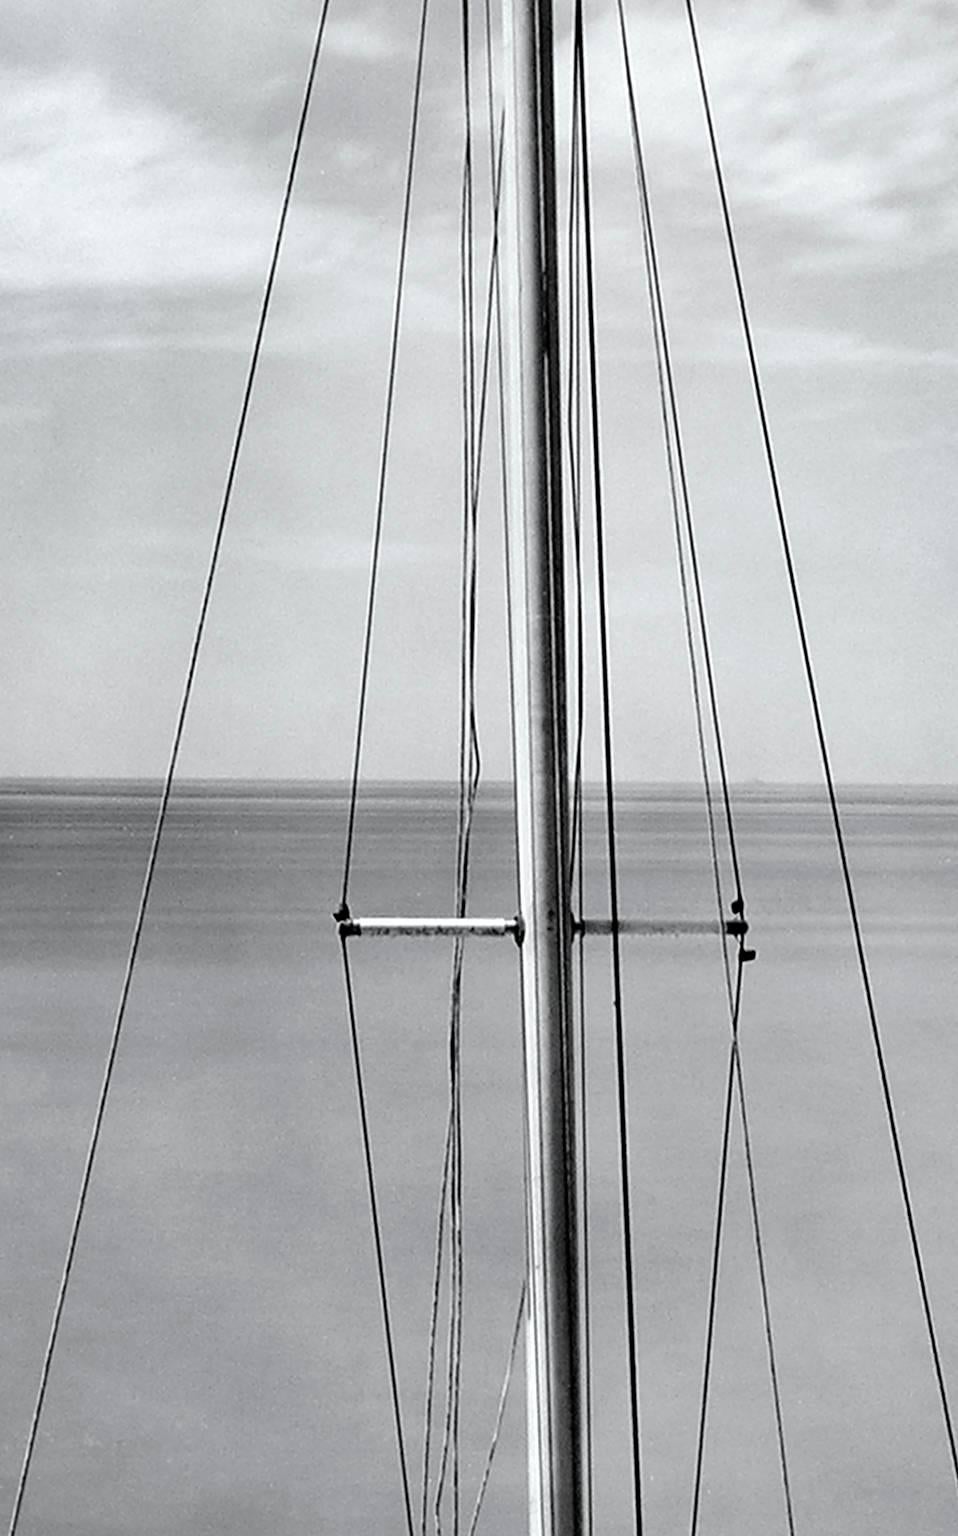 Three Masts, Malibu, CA - Photograph by Douglas Busch